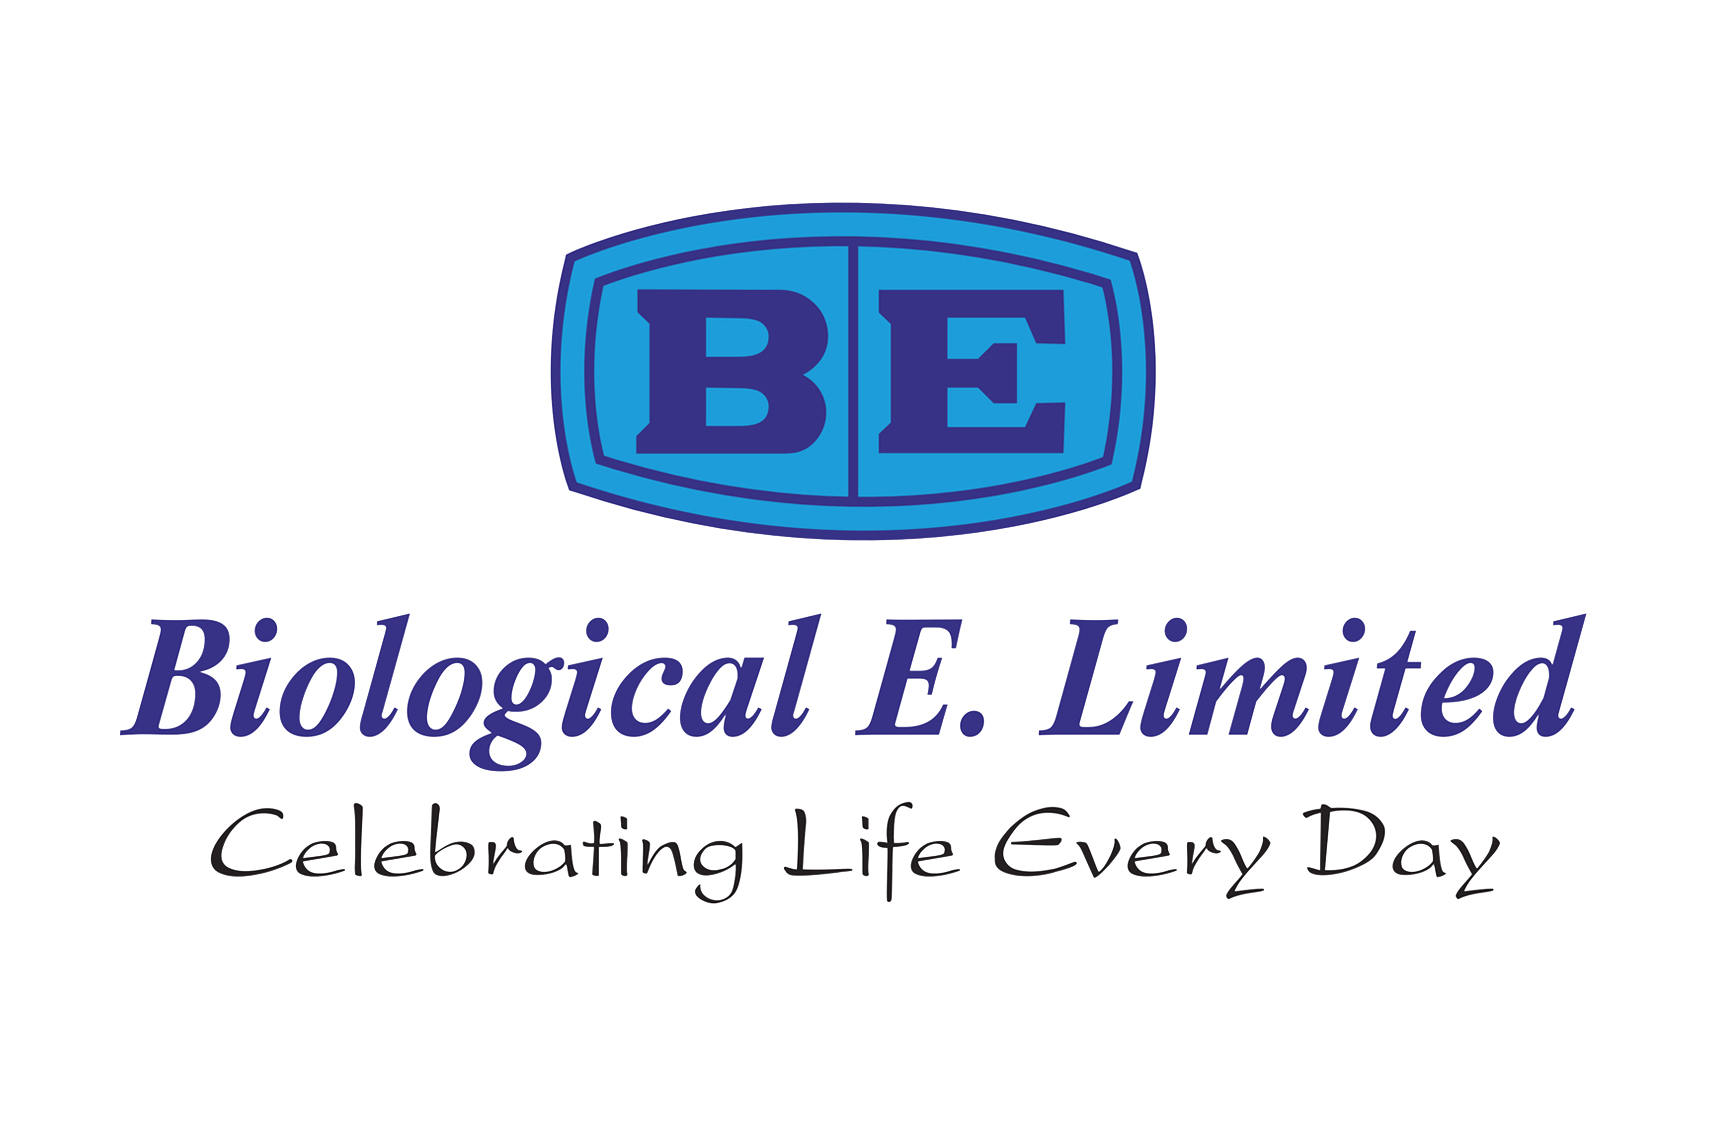 Biological E Ltd